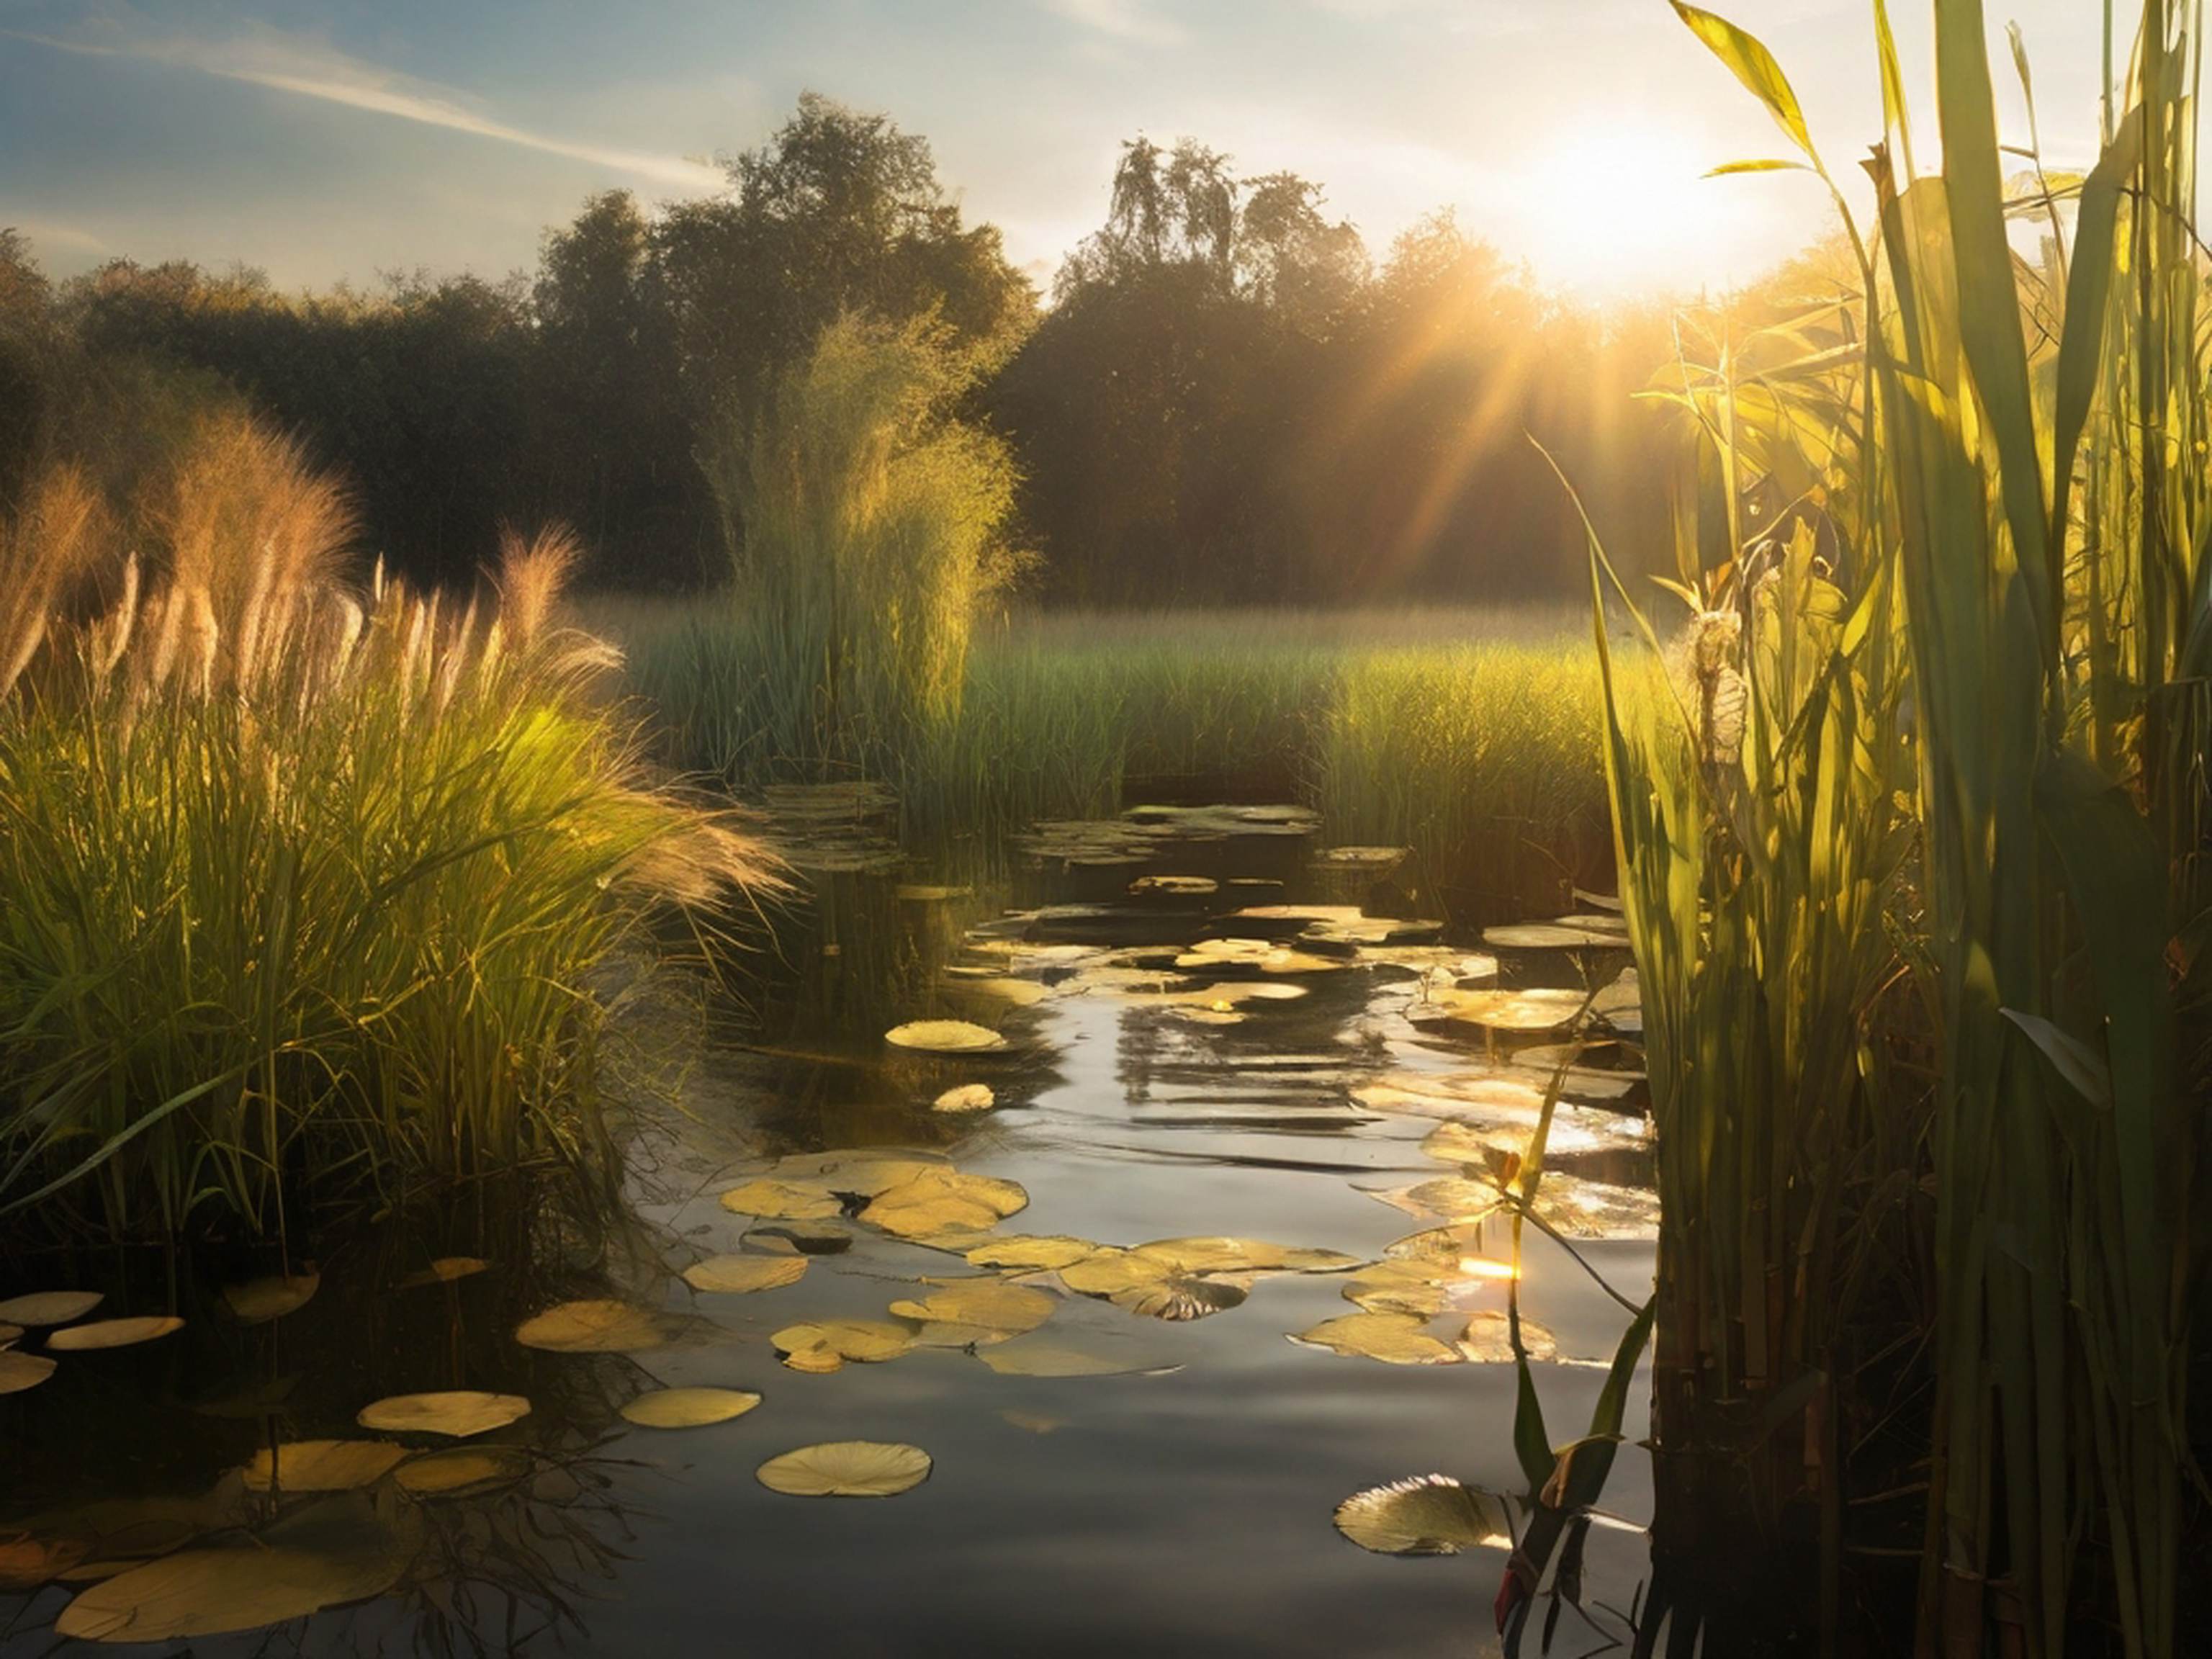 Nature's Detail: Sunbeams Illuminating the Pond's Wildlife